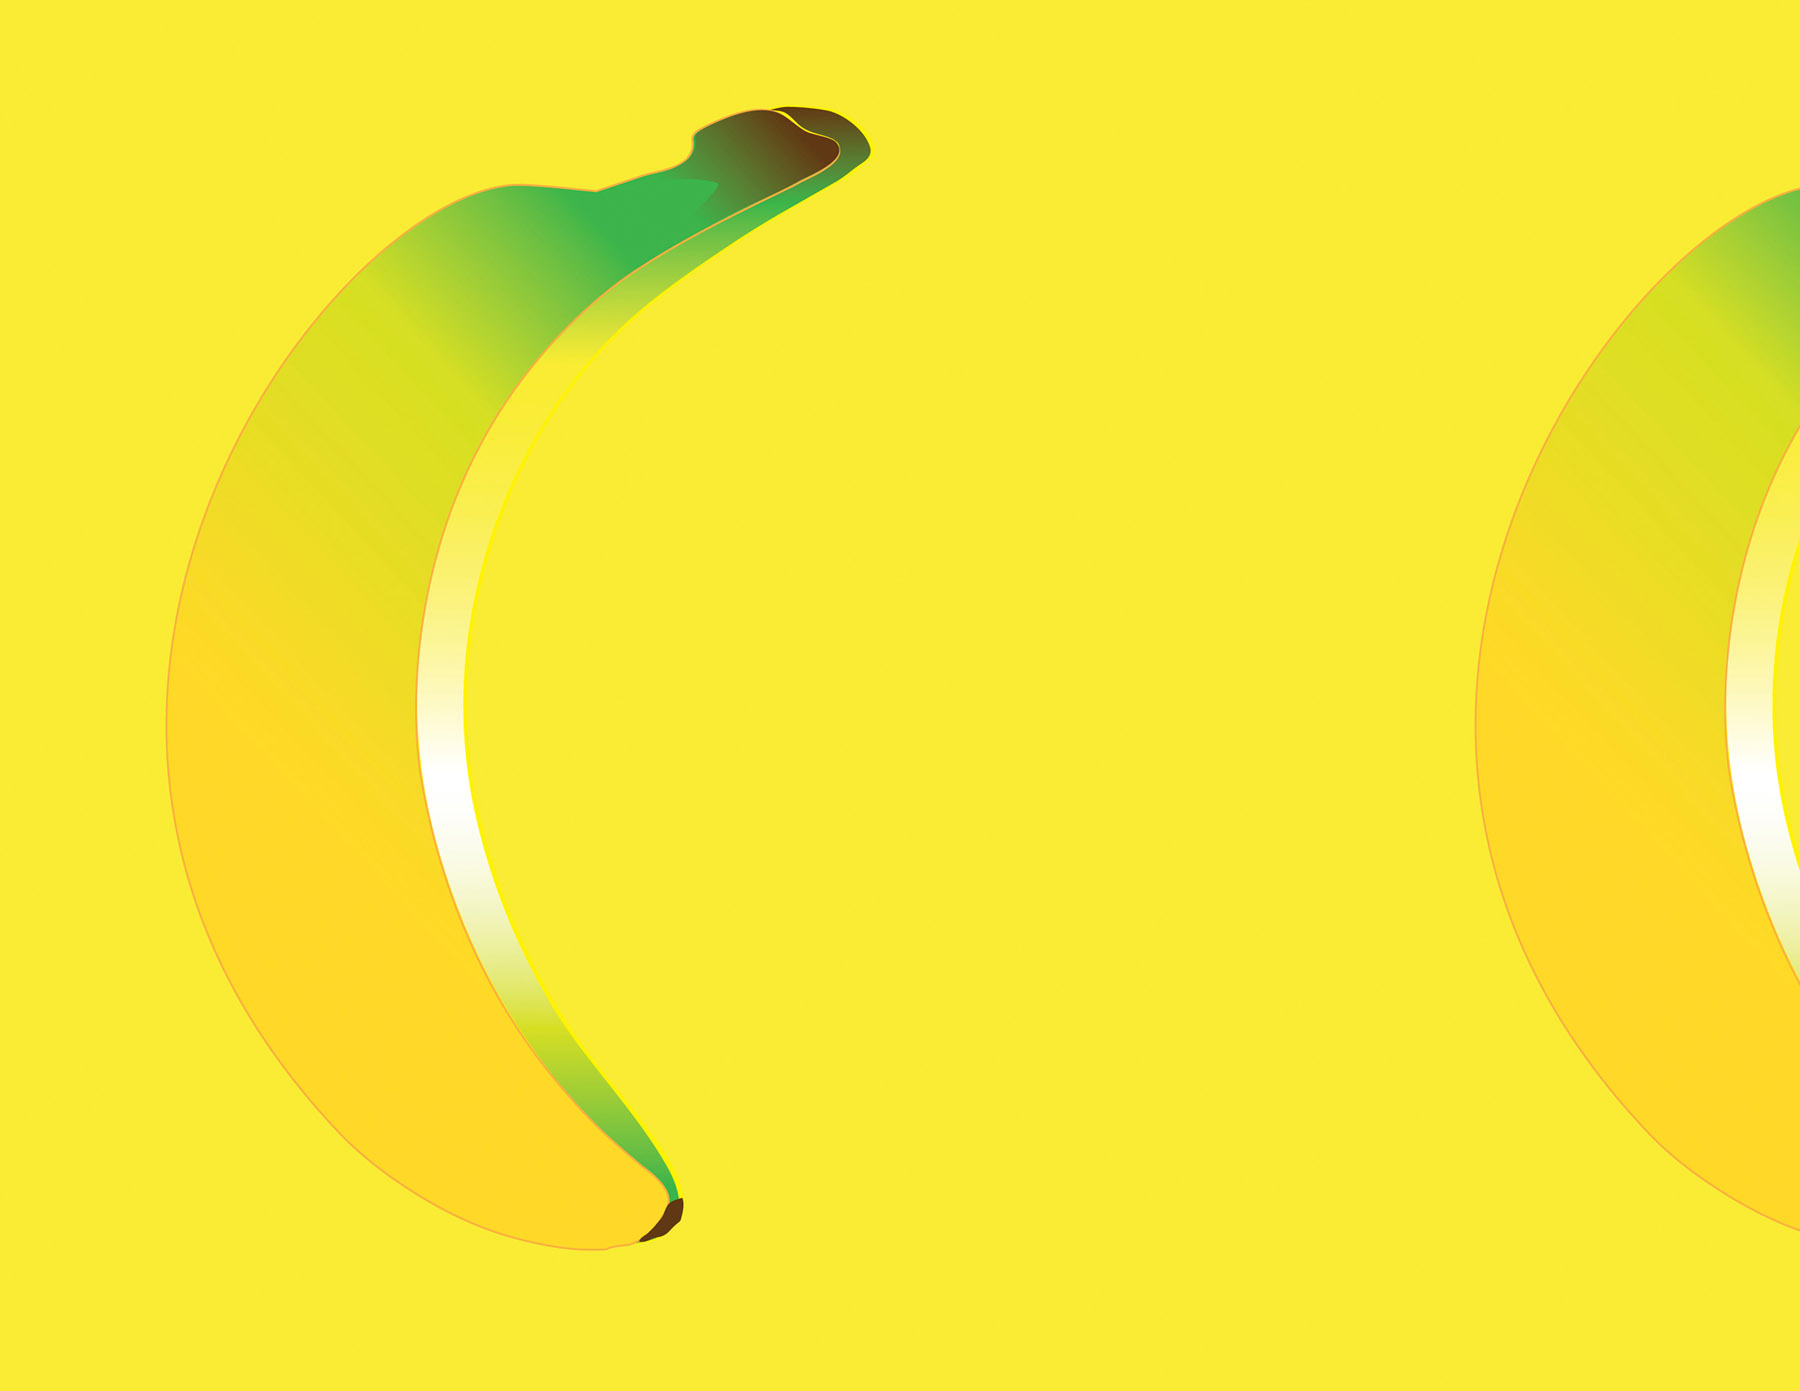 banana one to one.jpg